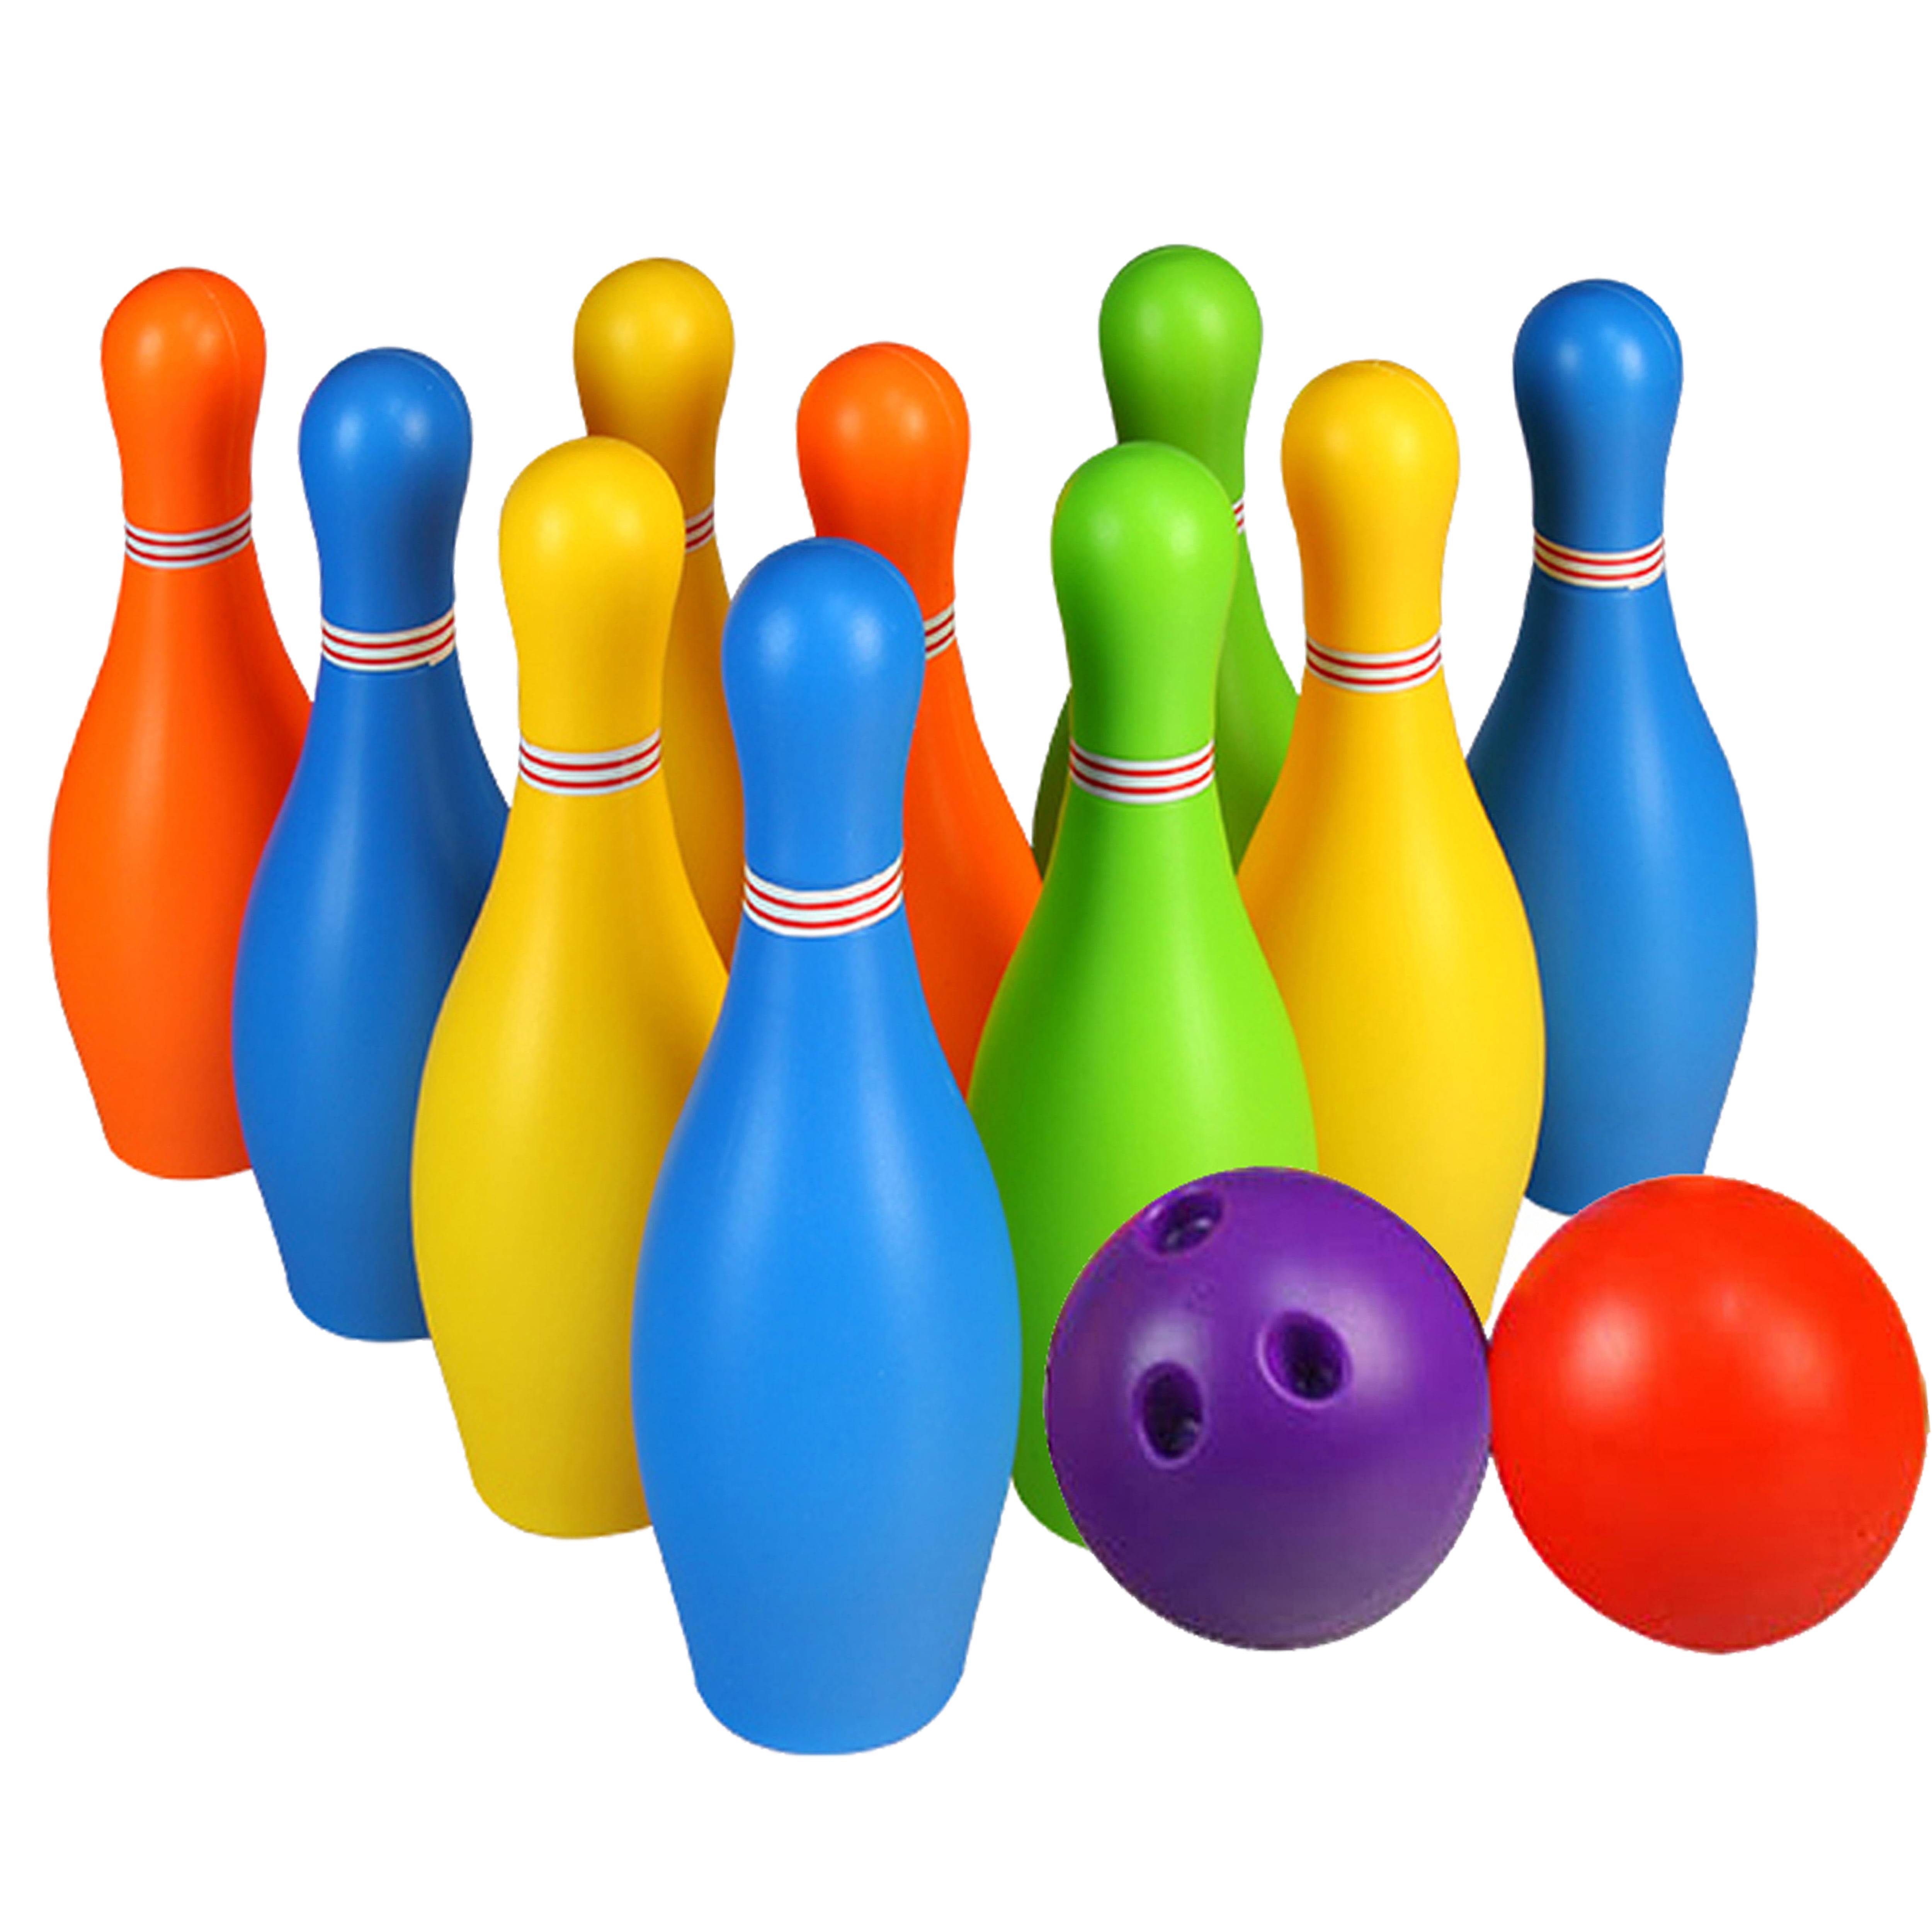 S/M/L 12PCS Toy Bowling Play Set Kids Toys Bowling Ball Pins Gift Game Educatio 